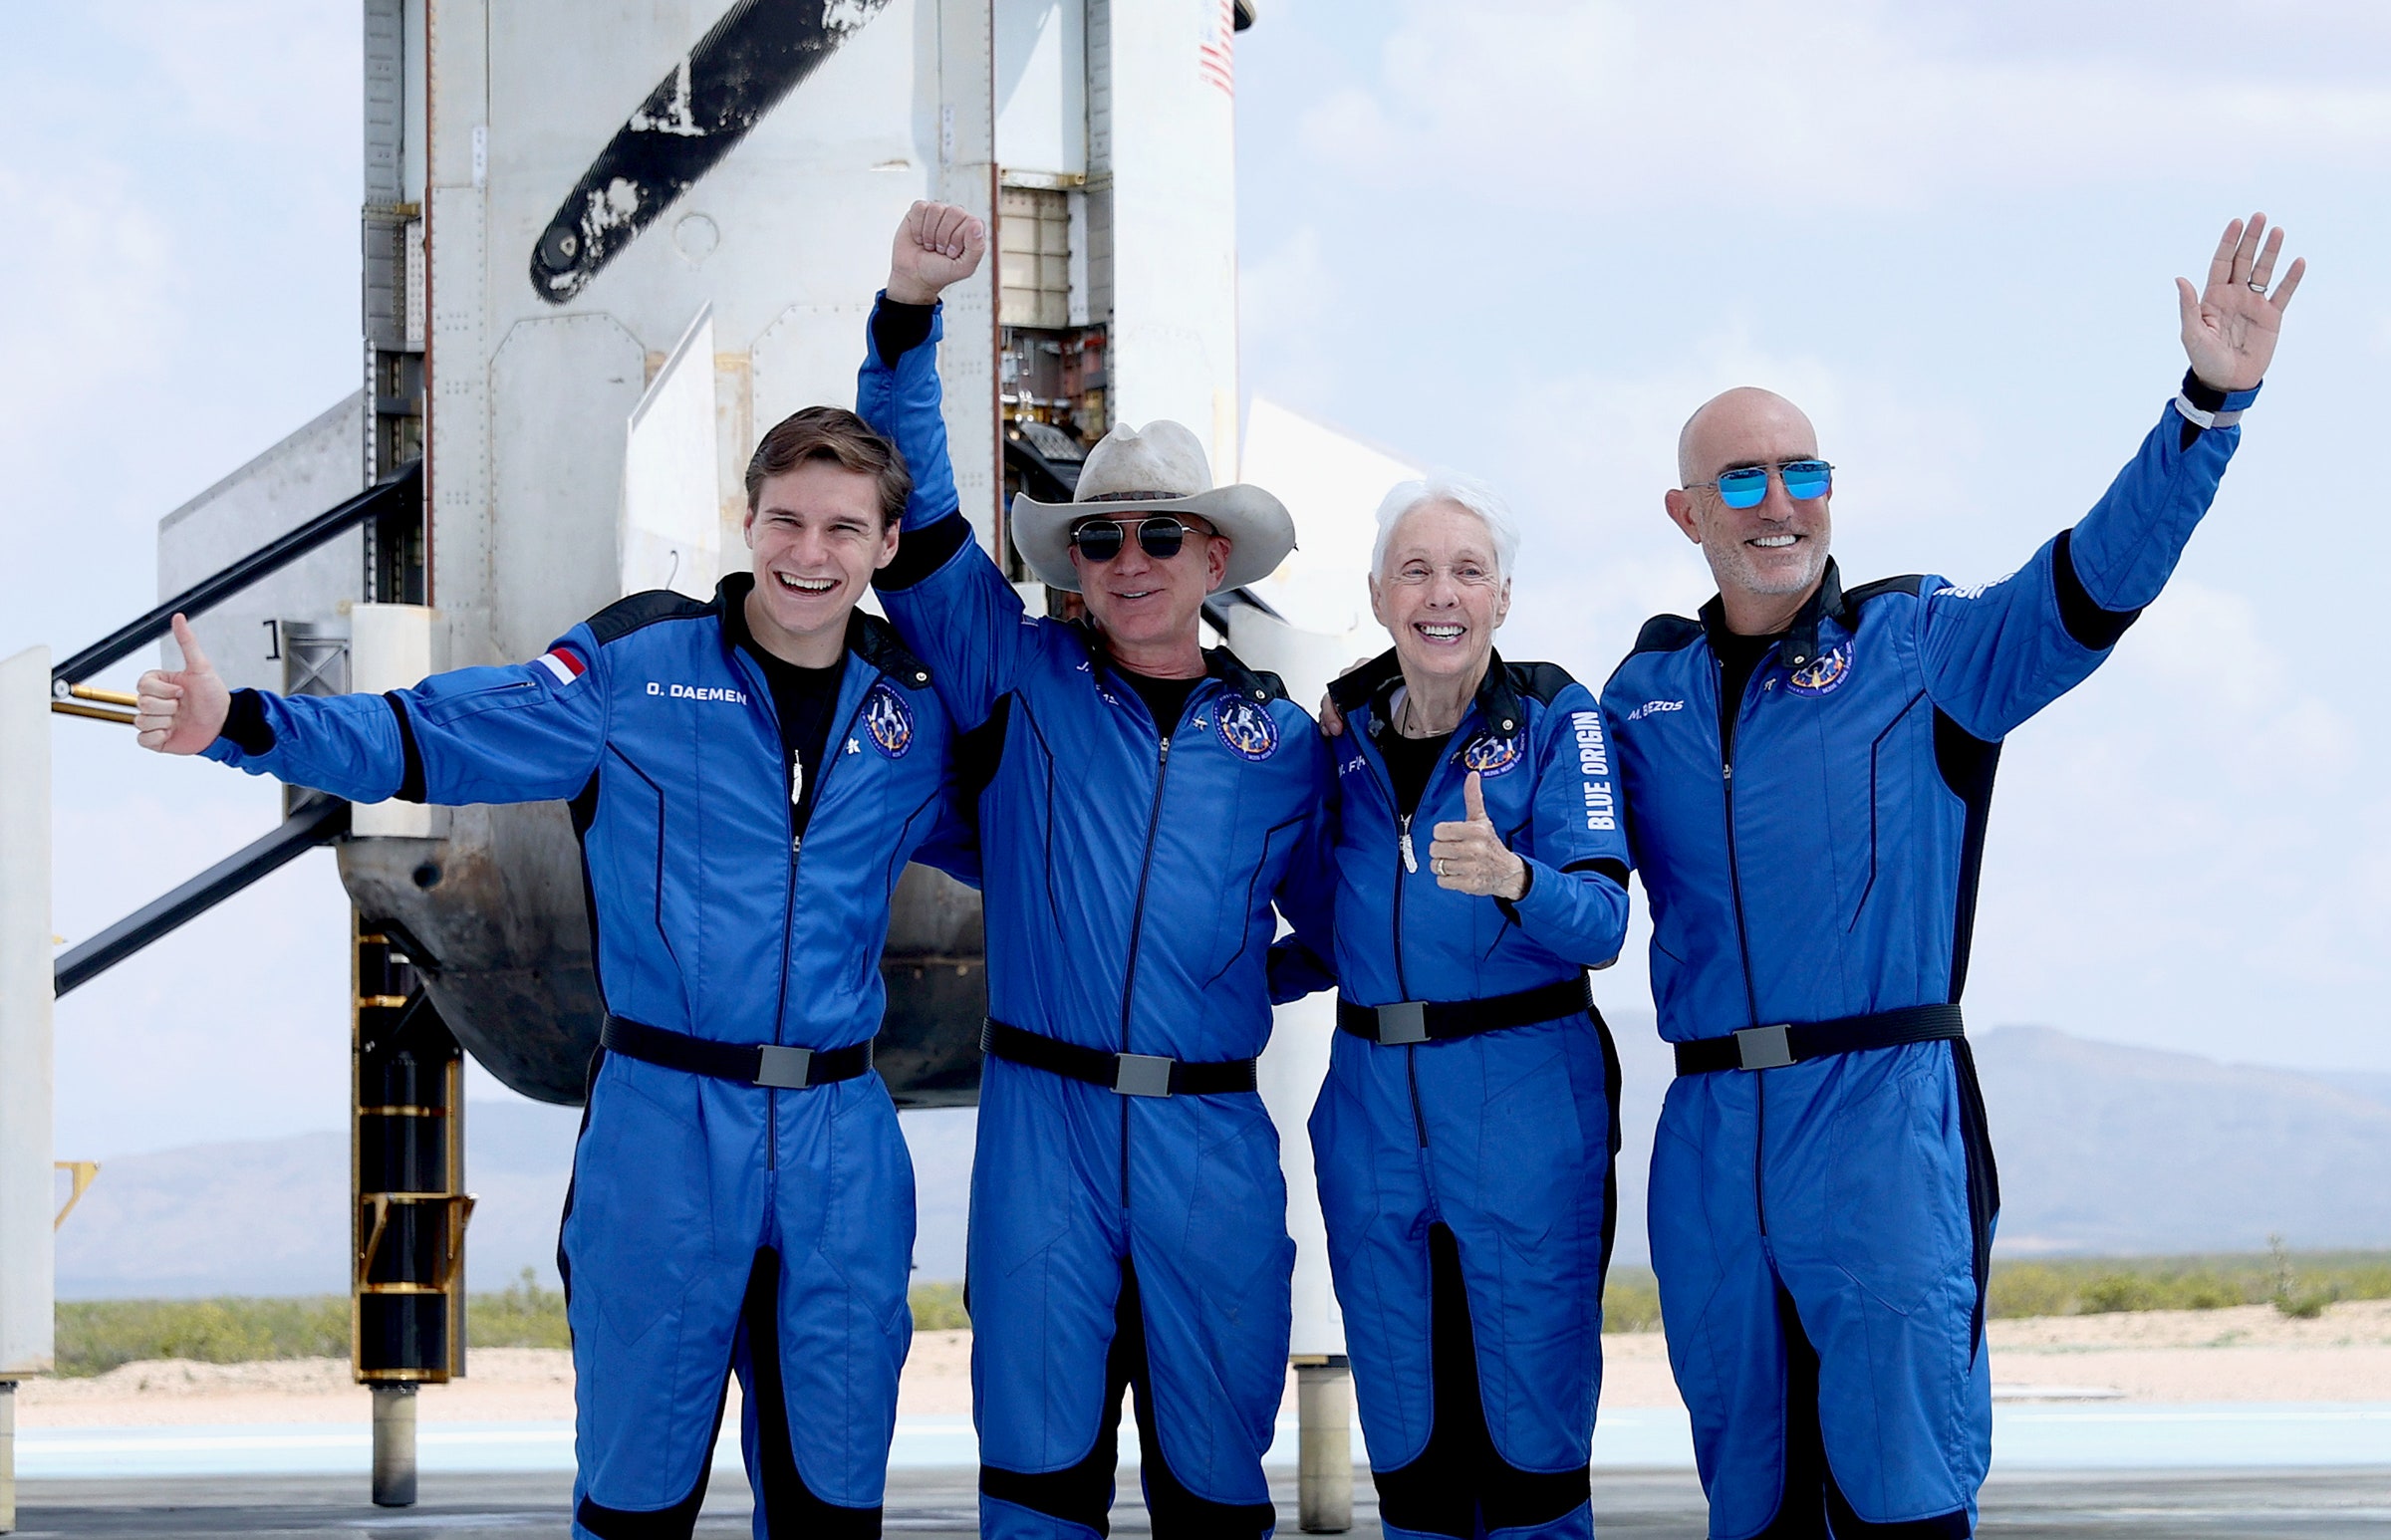 Jeff Bezos Wore a Tailored Spacesuit on his 1st Blue Origin Space Tourism Flight